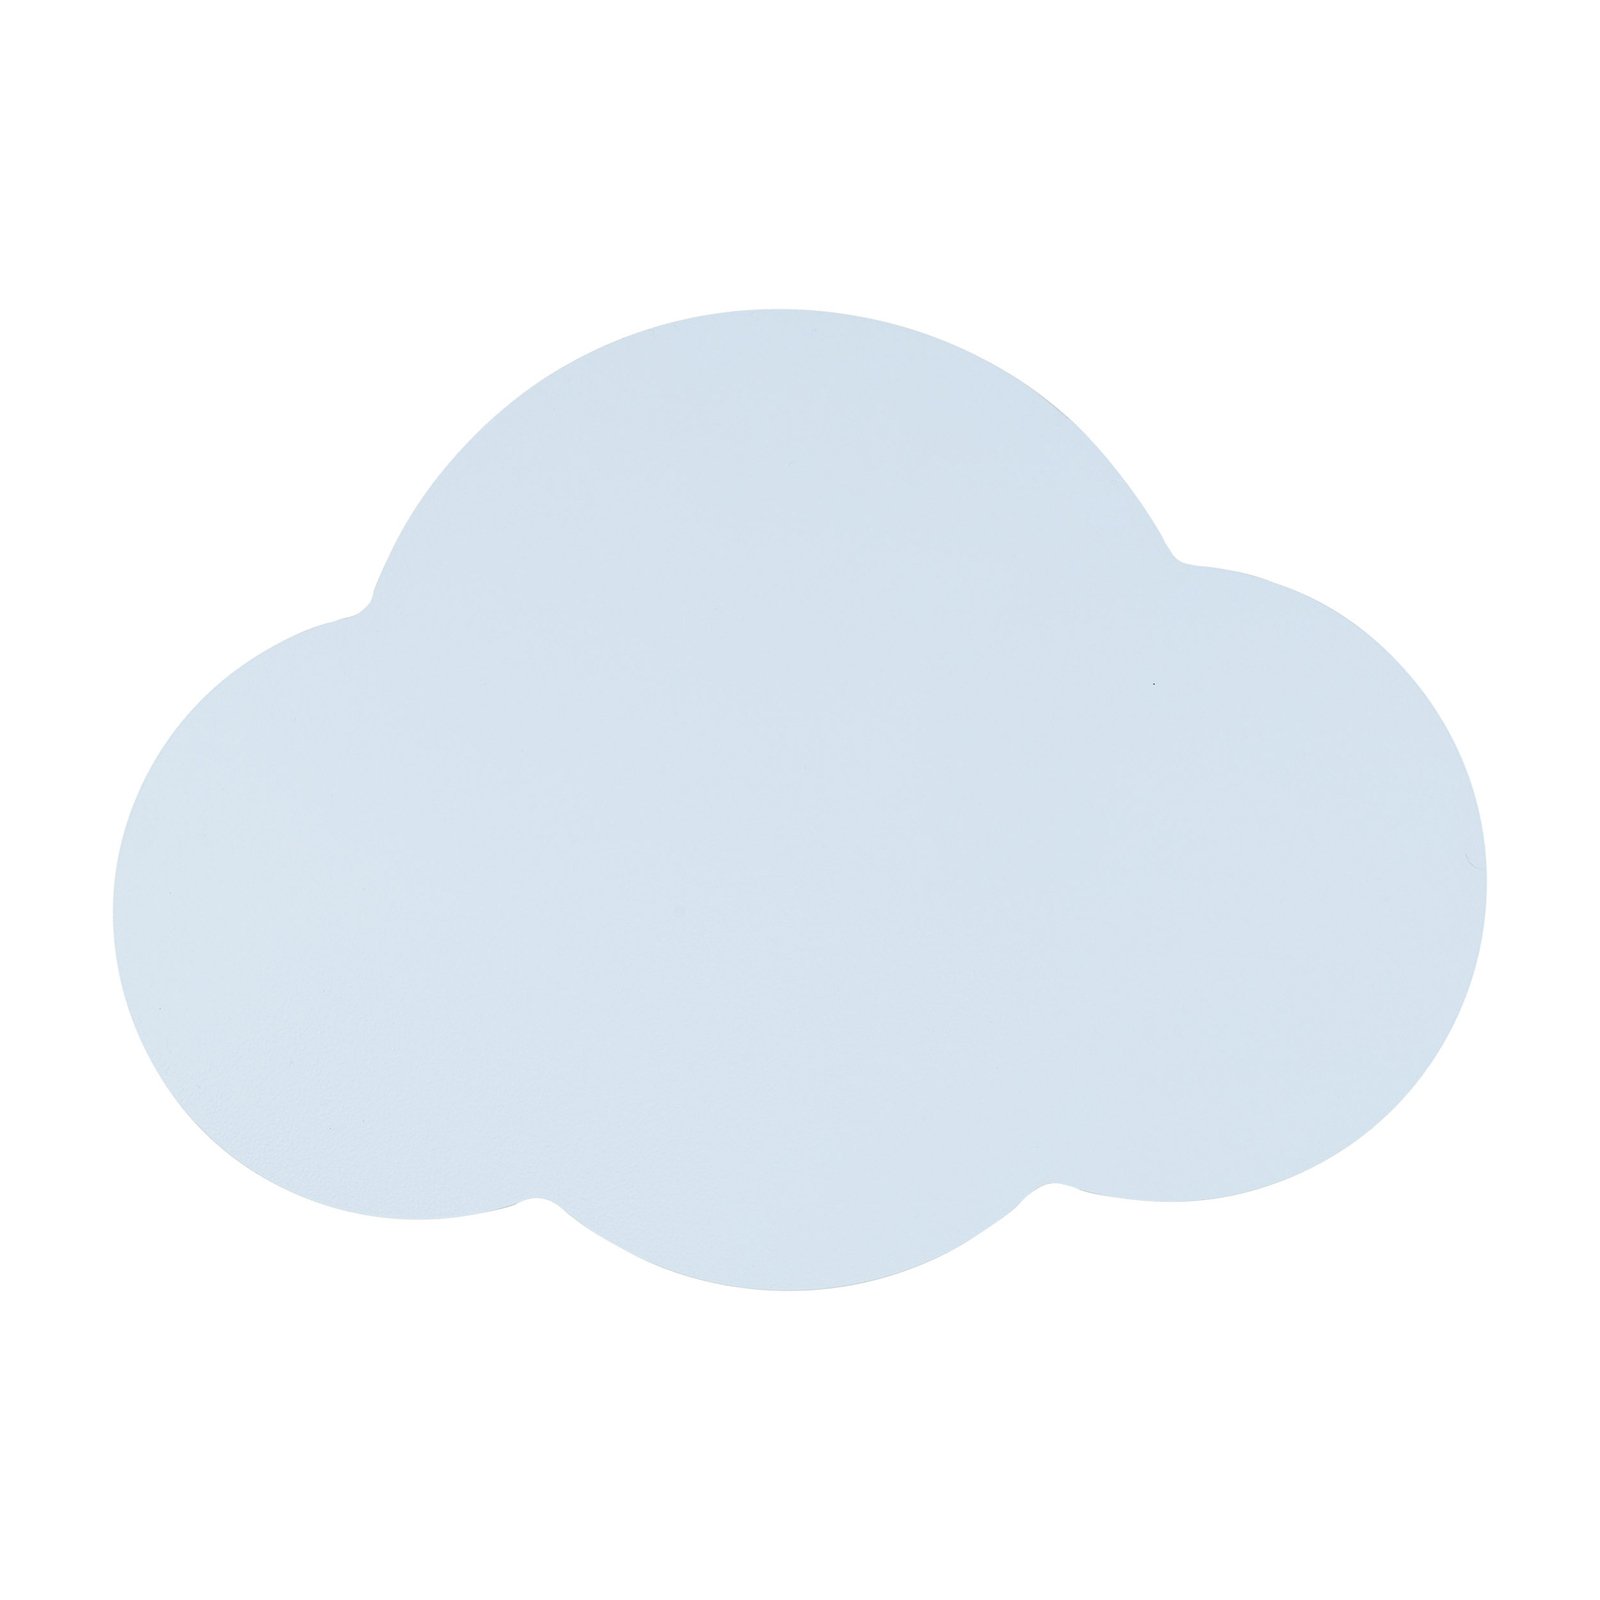 Wandlamp Cloud, blauw, staal, indirect licht, 38 x 27 cm